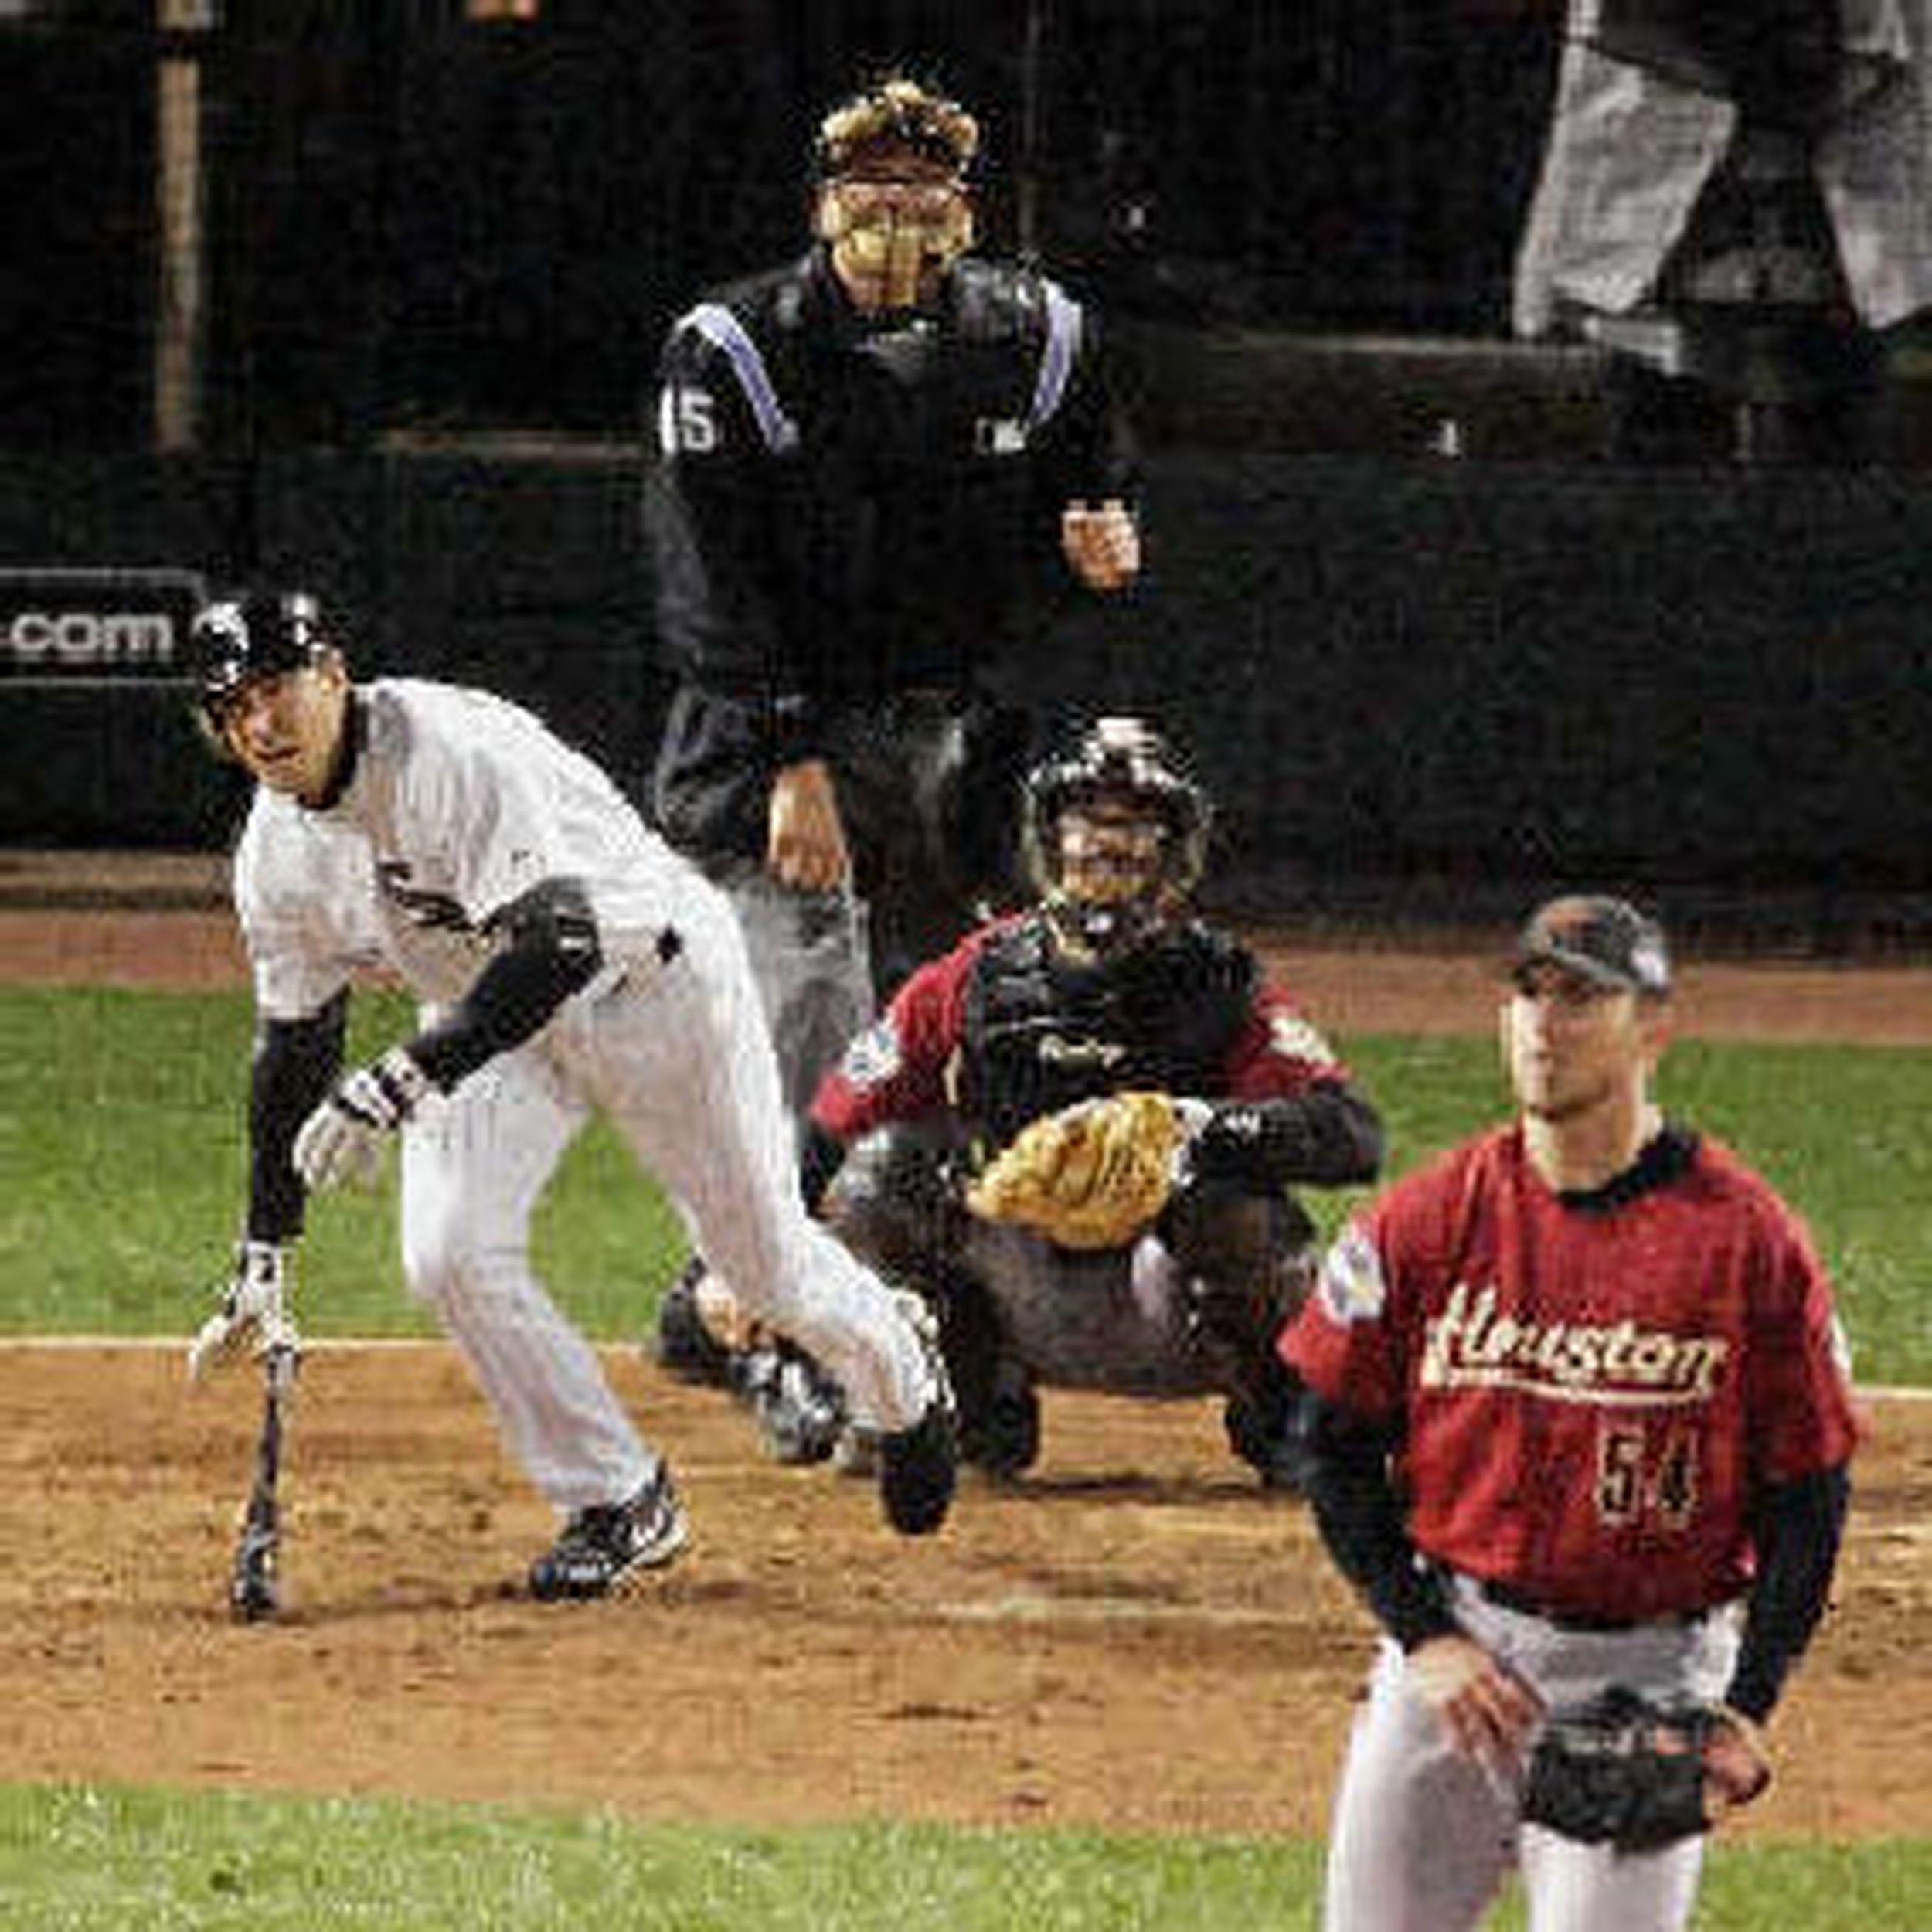 Astros: Scott Bleeping Podsednik's World Series home run